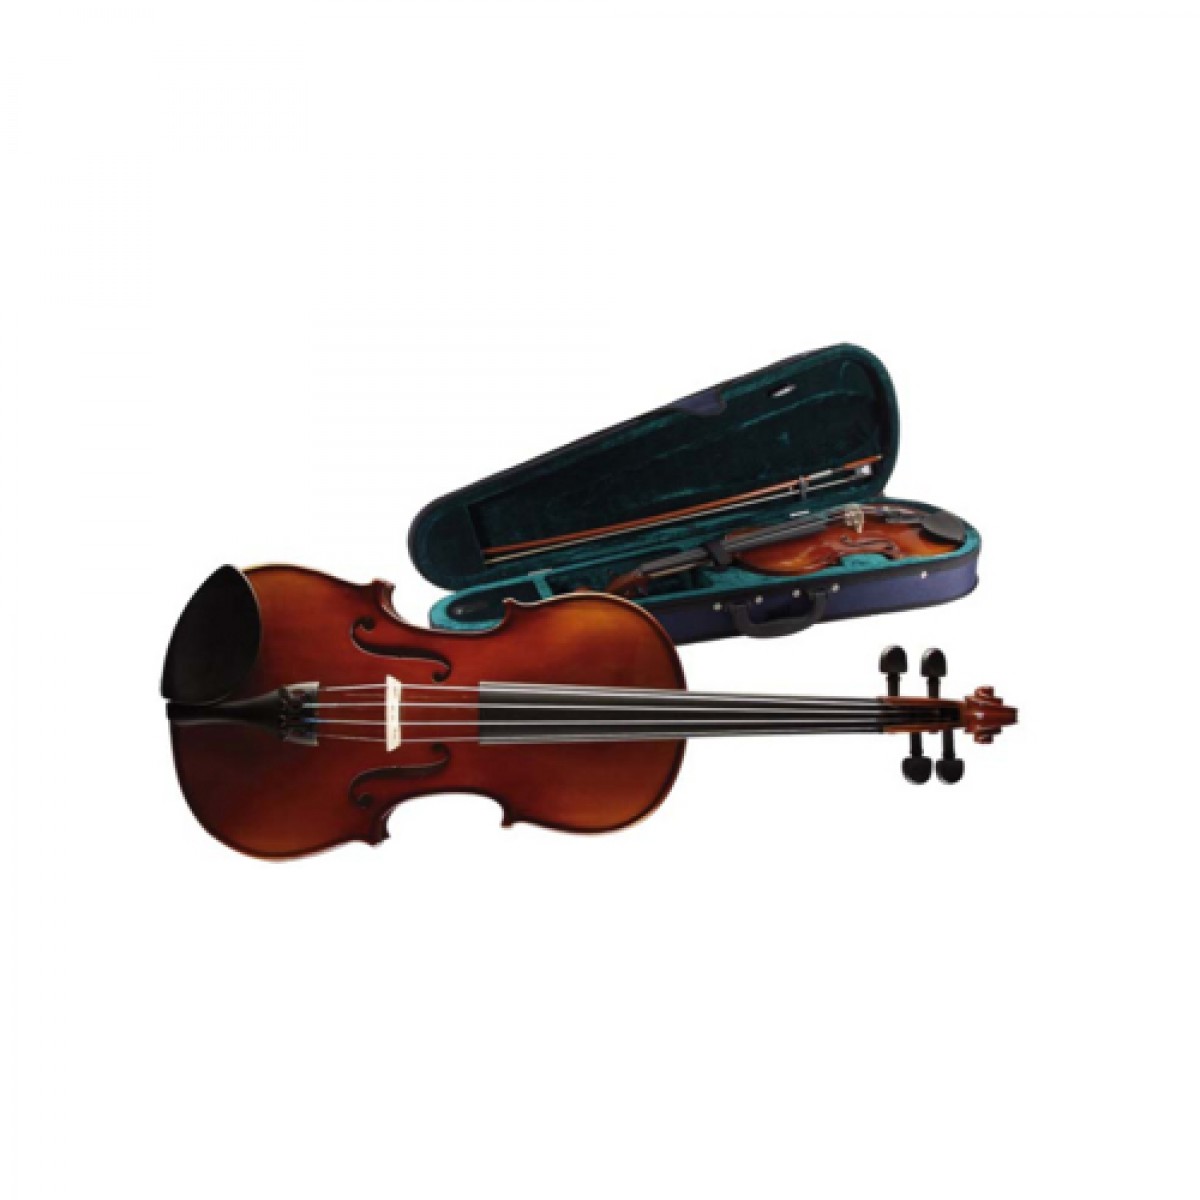 Ebenholzgriffbrett inkl Koffer 1/2 vollmassive Ahorn Geige 